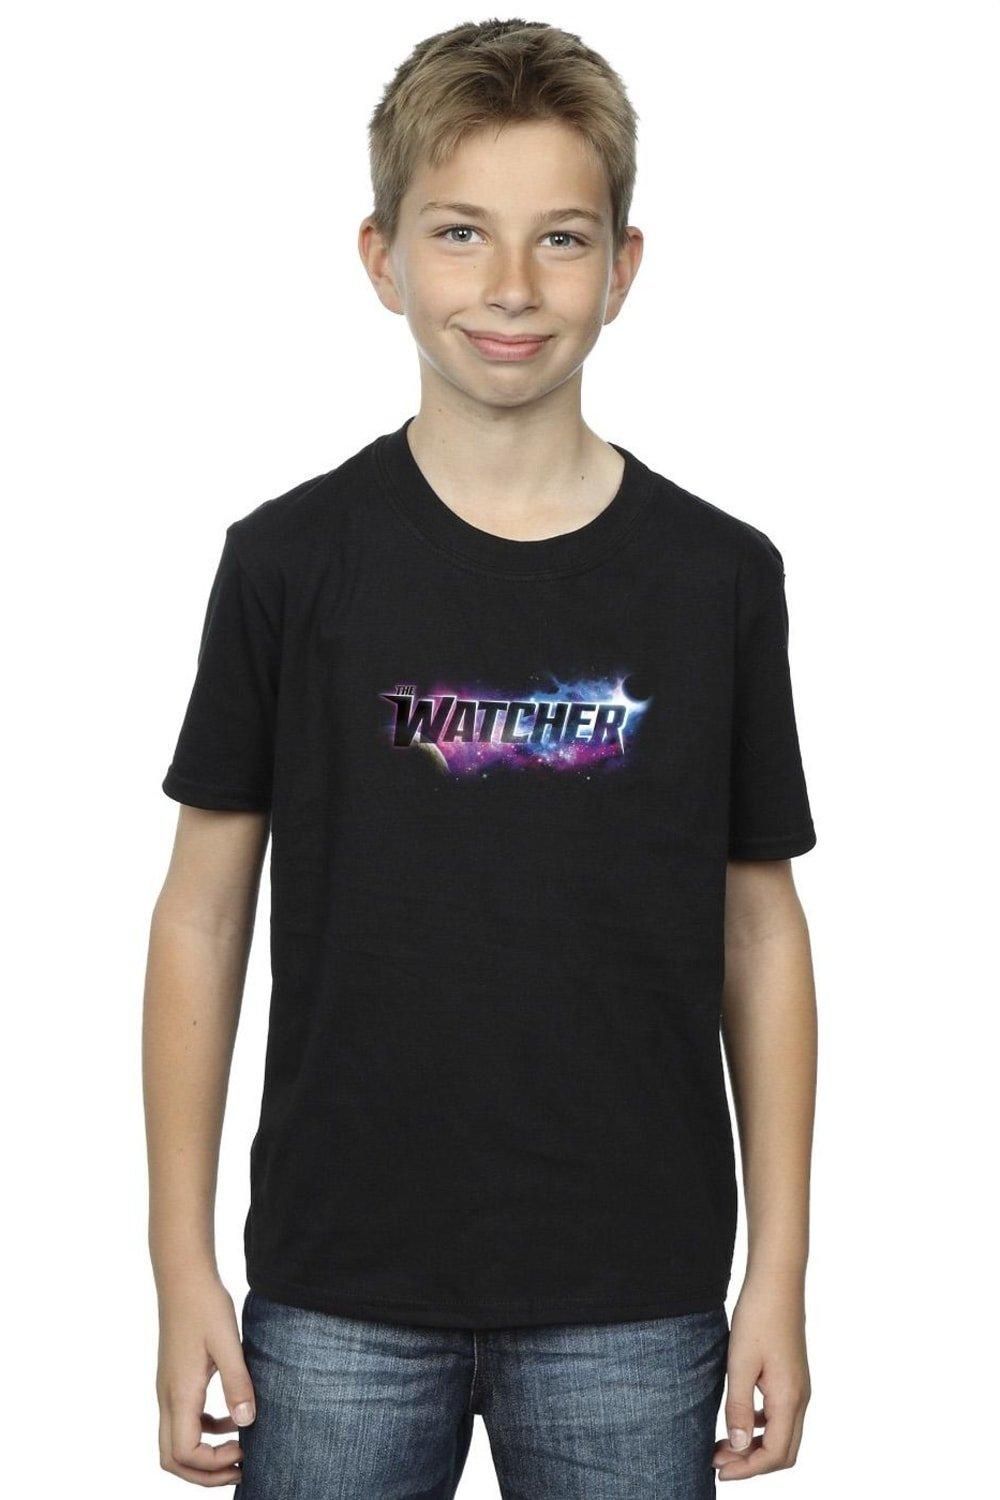 What If Watcher T-Shirt